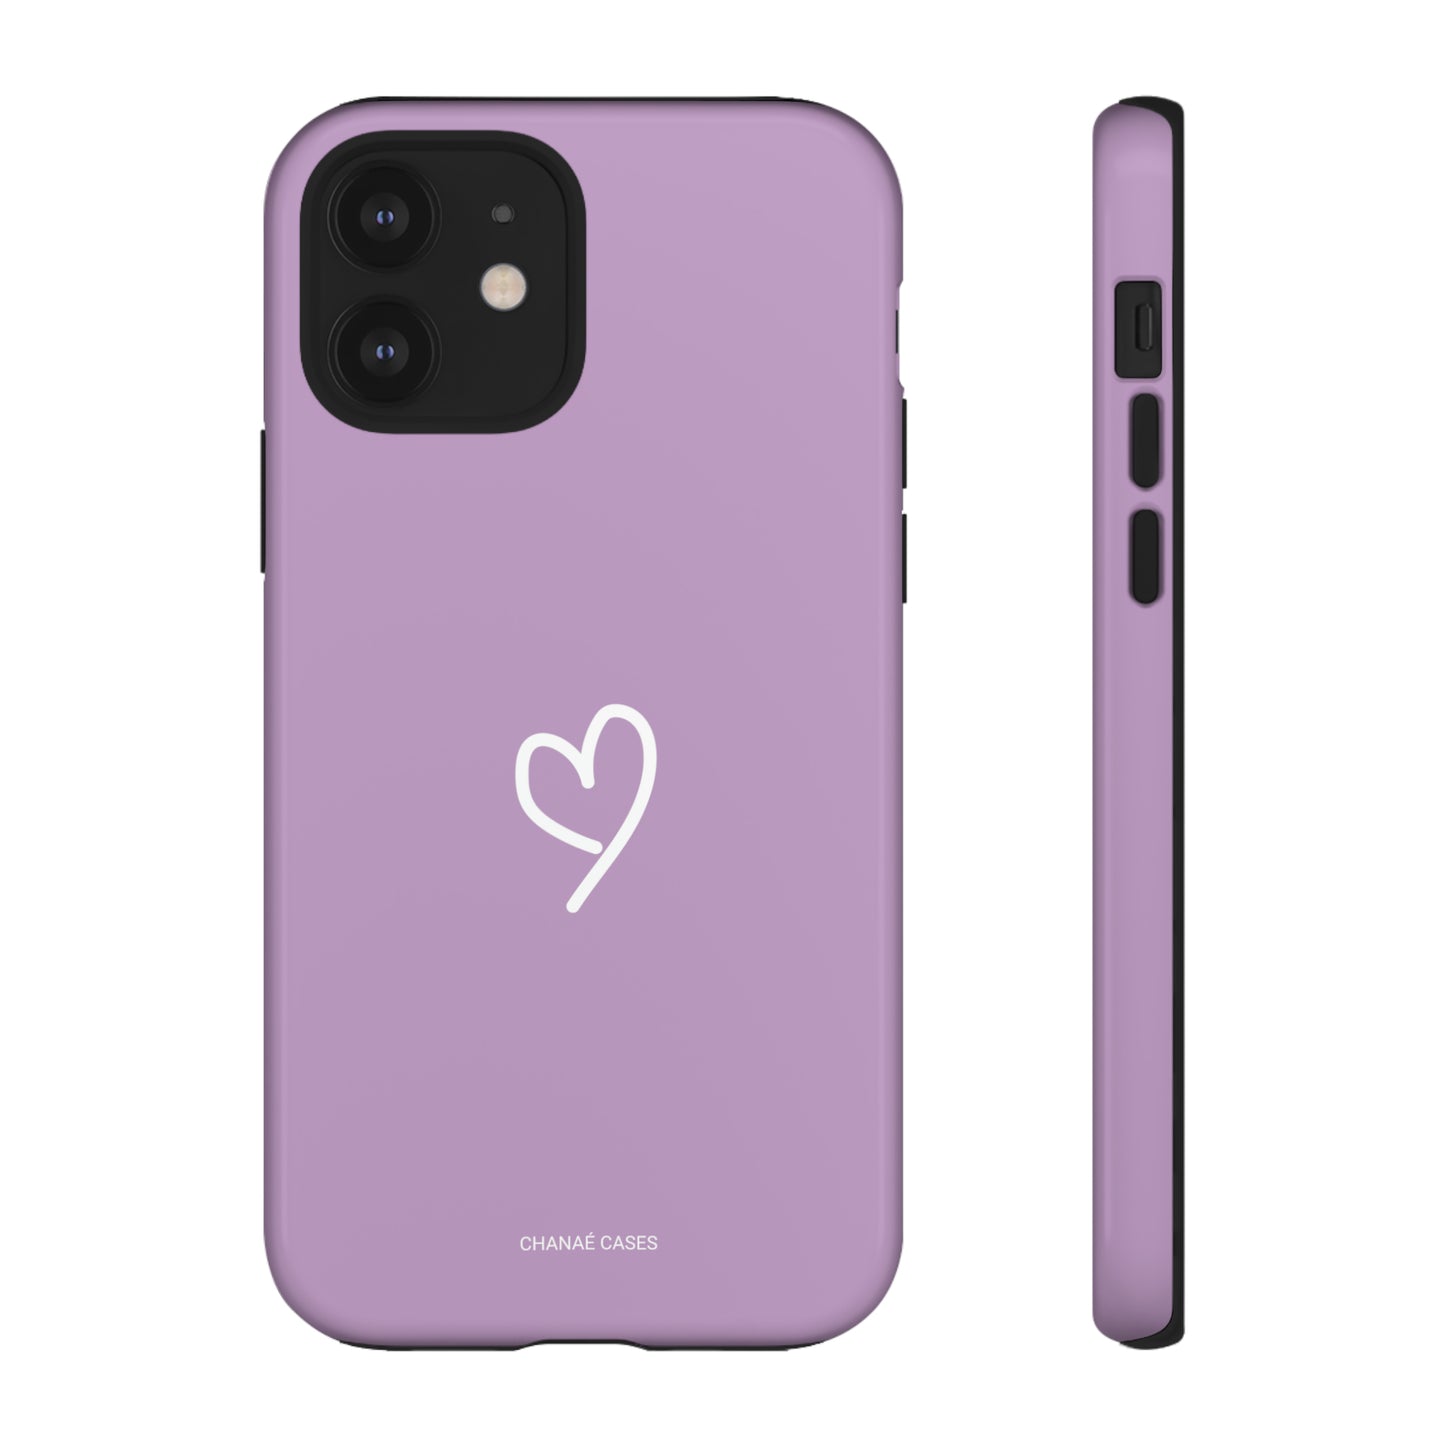 Spread Love iPhone "Tough" Case (Lilac)